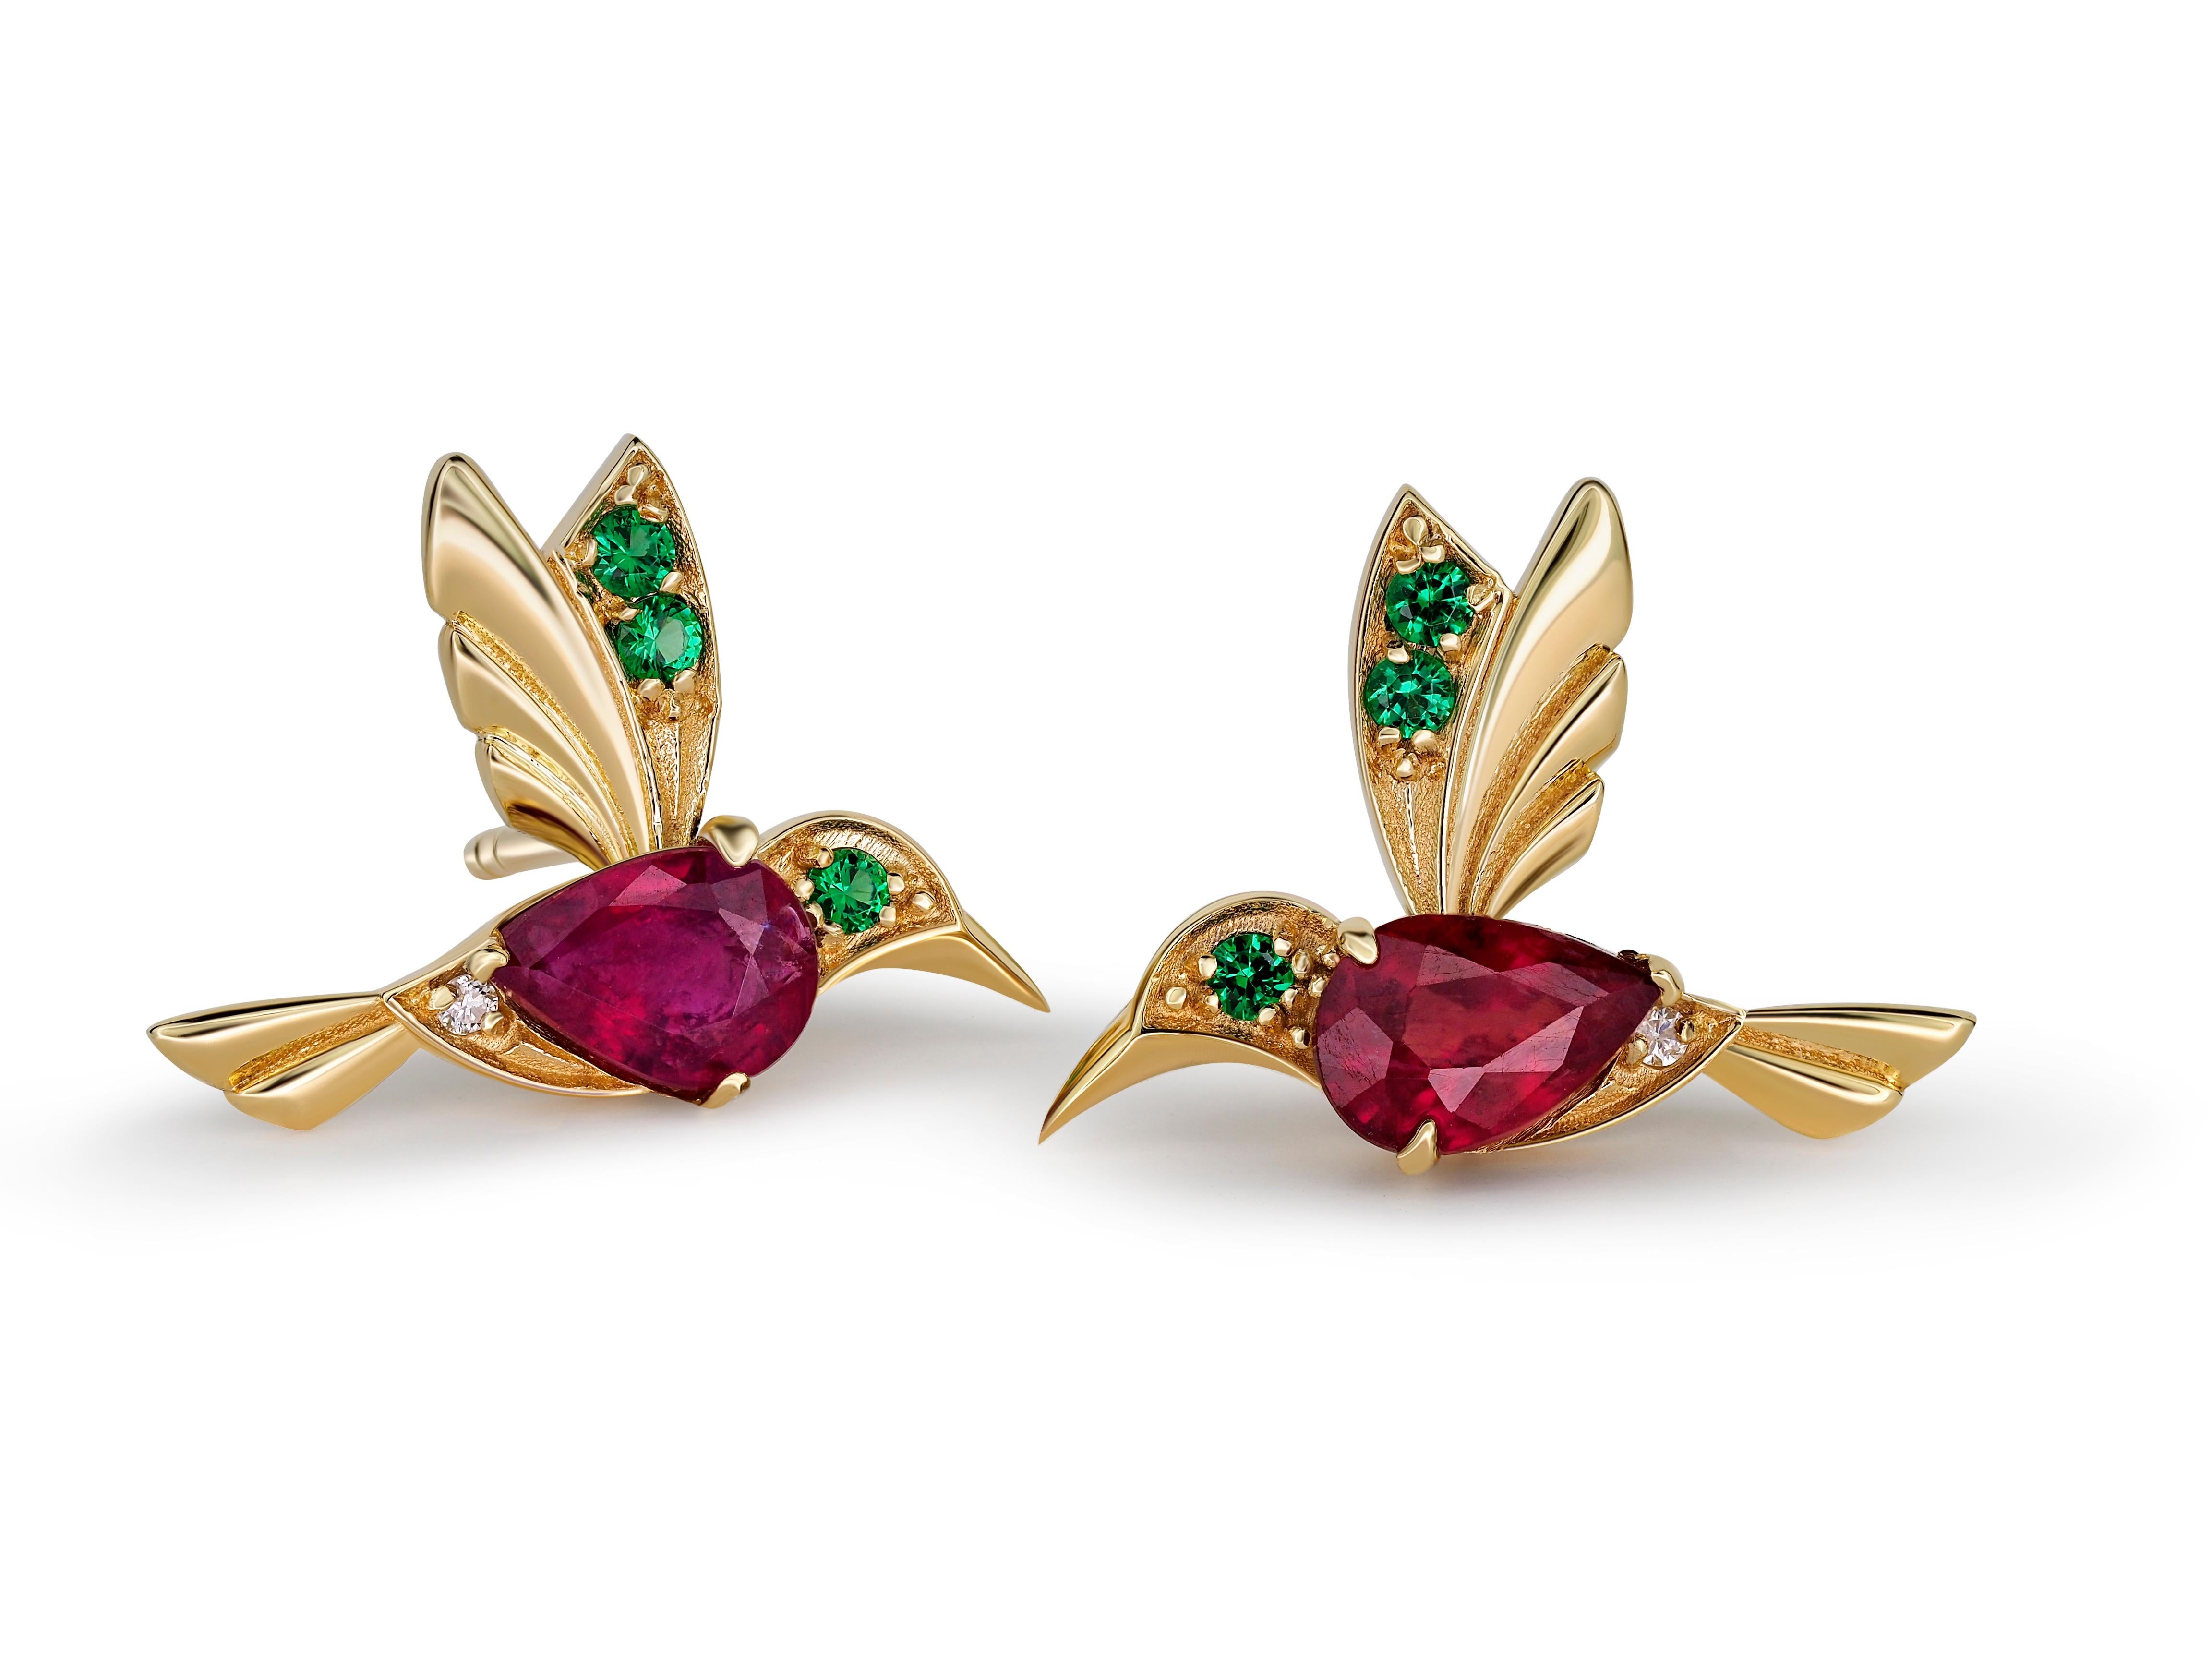 Modern 14k Gold Hummingbird Earings Studs with Rubies, Bird Stud Earrings with Gems !